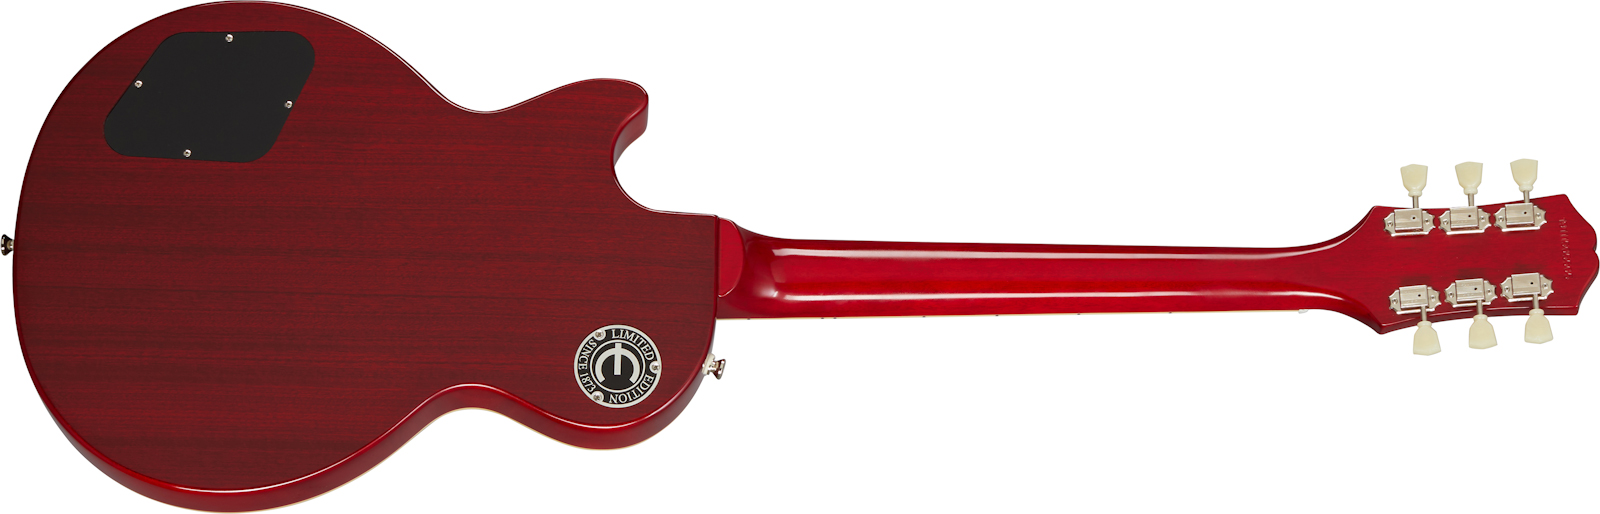 Epiphone Les Paul Standard 1959 Outfit 2h Ht Rw - Aged Dark Cherry Burst - Single-Cut-E-Gitarre - Variation 1